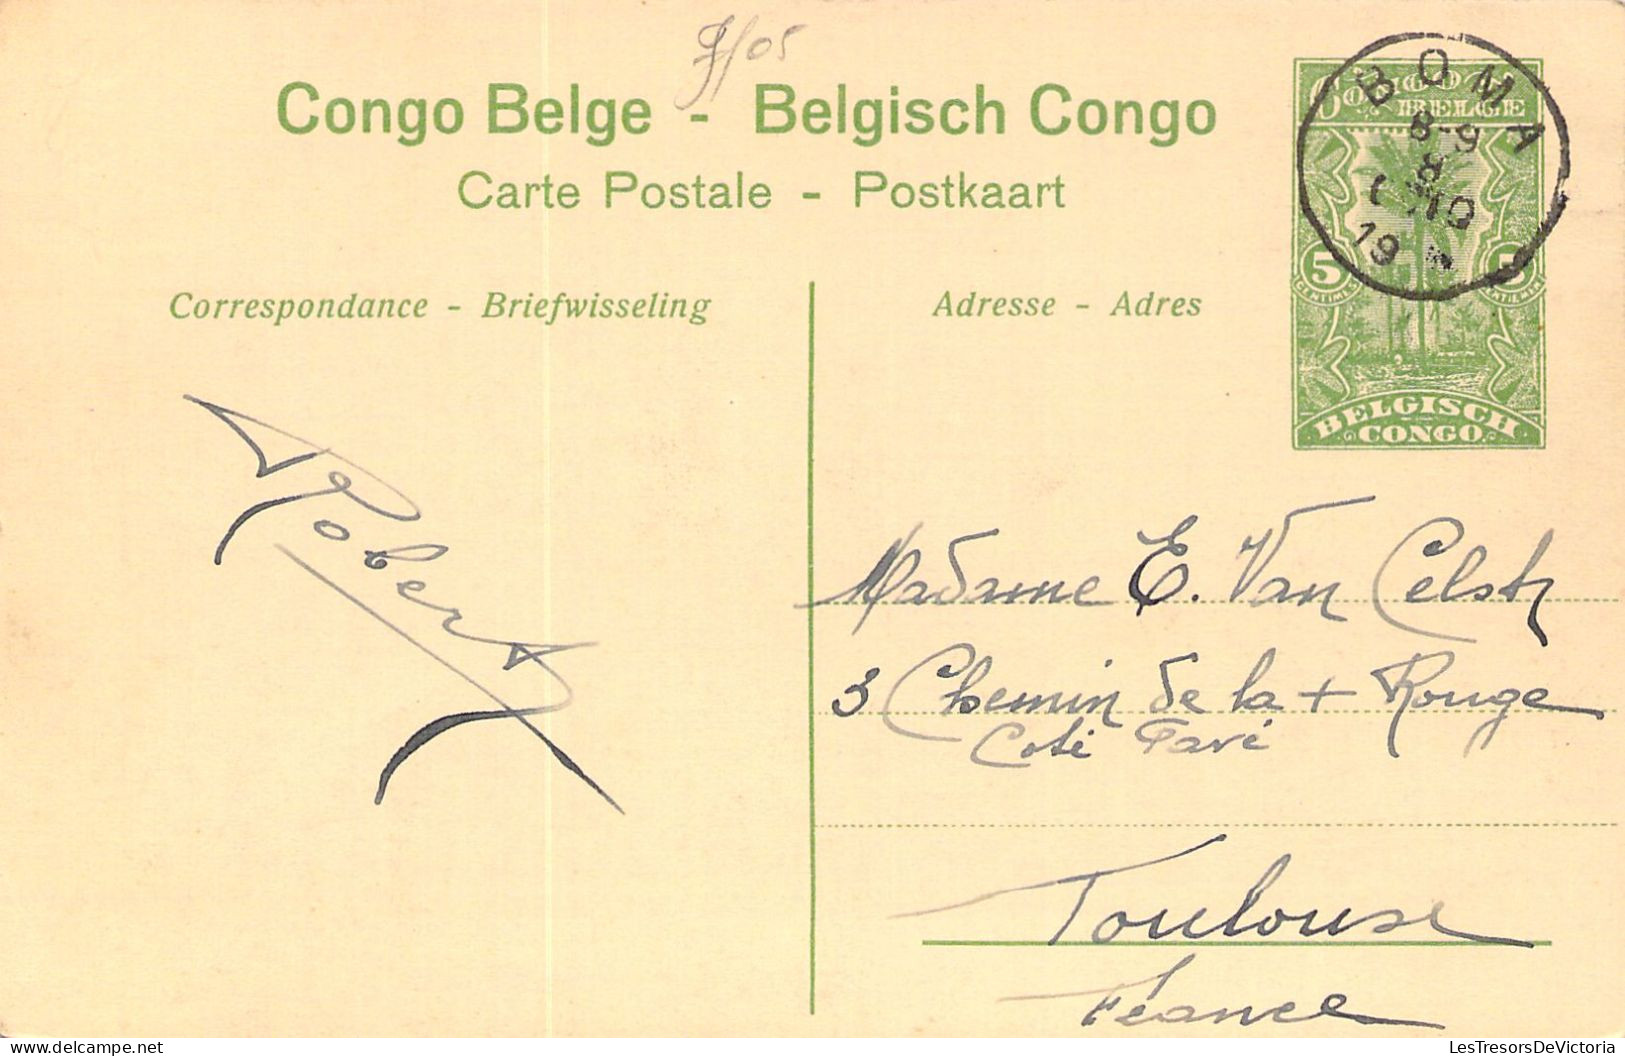 CONGO BELGE - Boma - Le Dimanche - Carte Postale Ancienne - Belgisch-Kongo